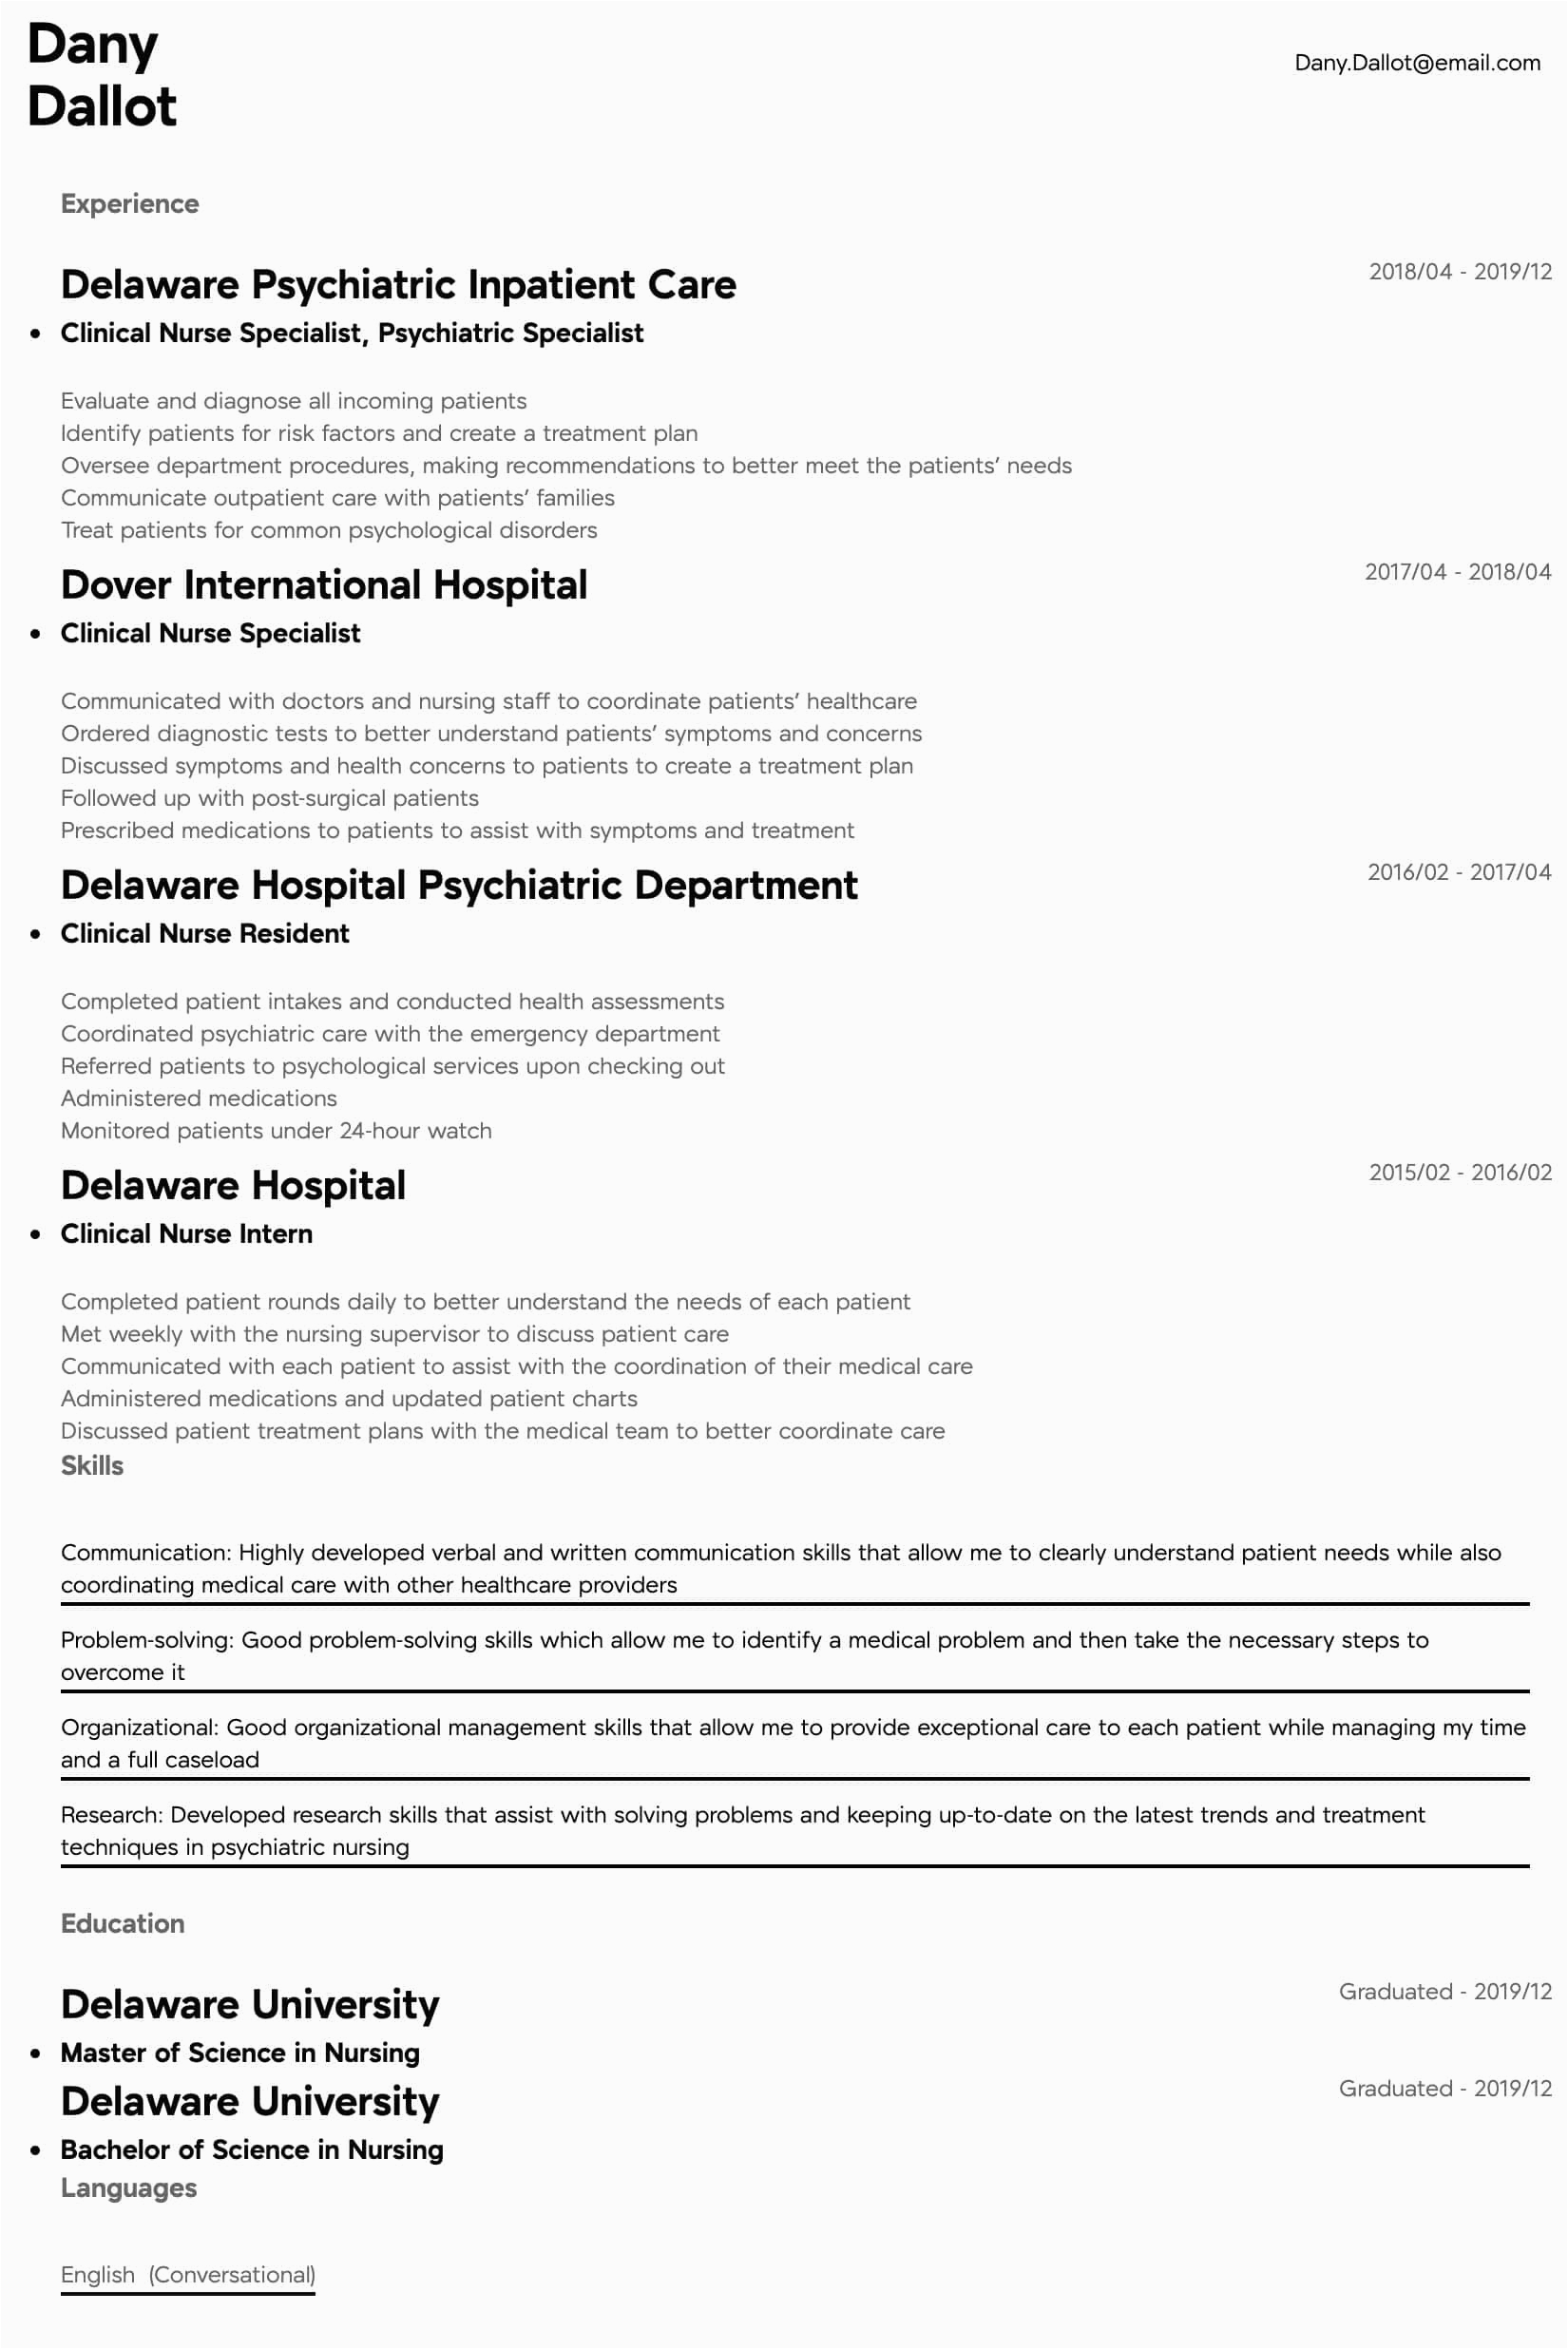 Sample Resume Of Clinical Nurse Specialist Clinical Nurse Specialist Resume Samples